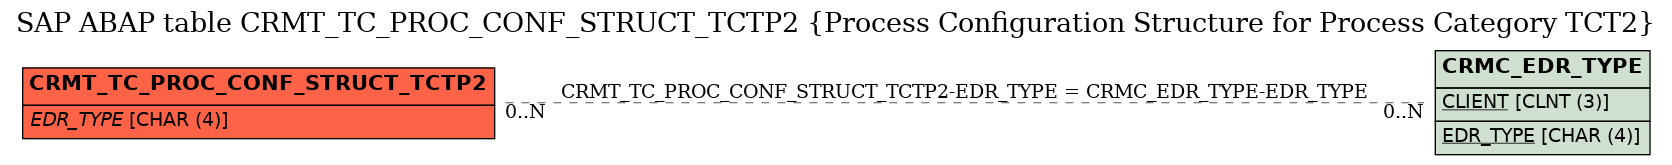 E-R Diagram for table CRMT_TC_PROC_CONF_STRUCT_TCTP2 (Process Configuration Structure for Process Category TCT2)